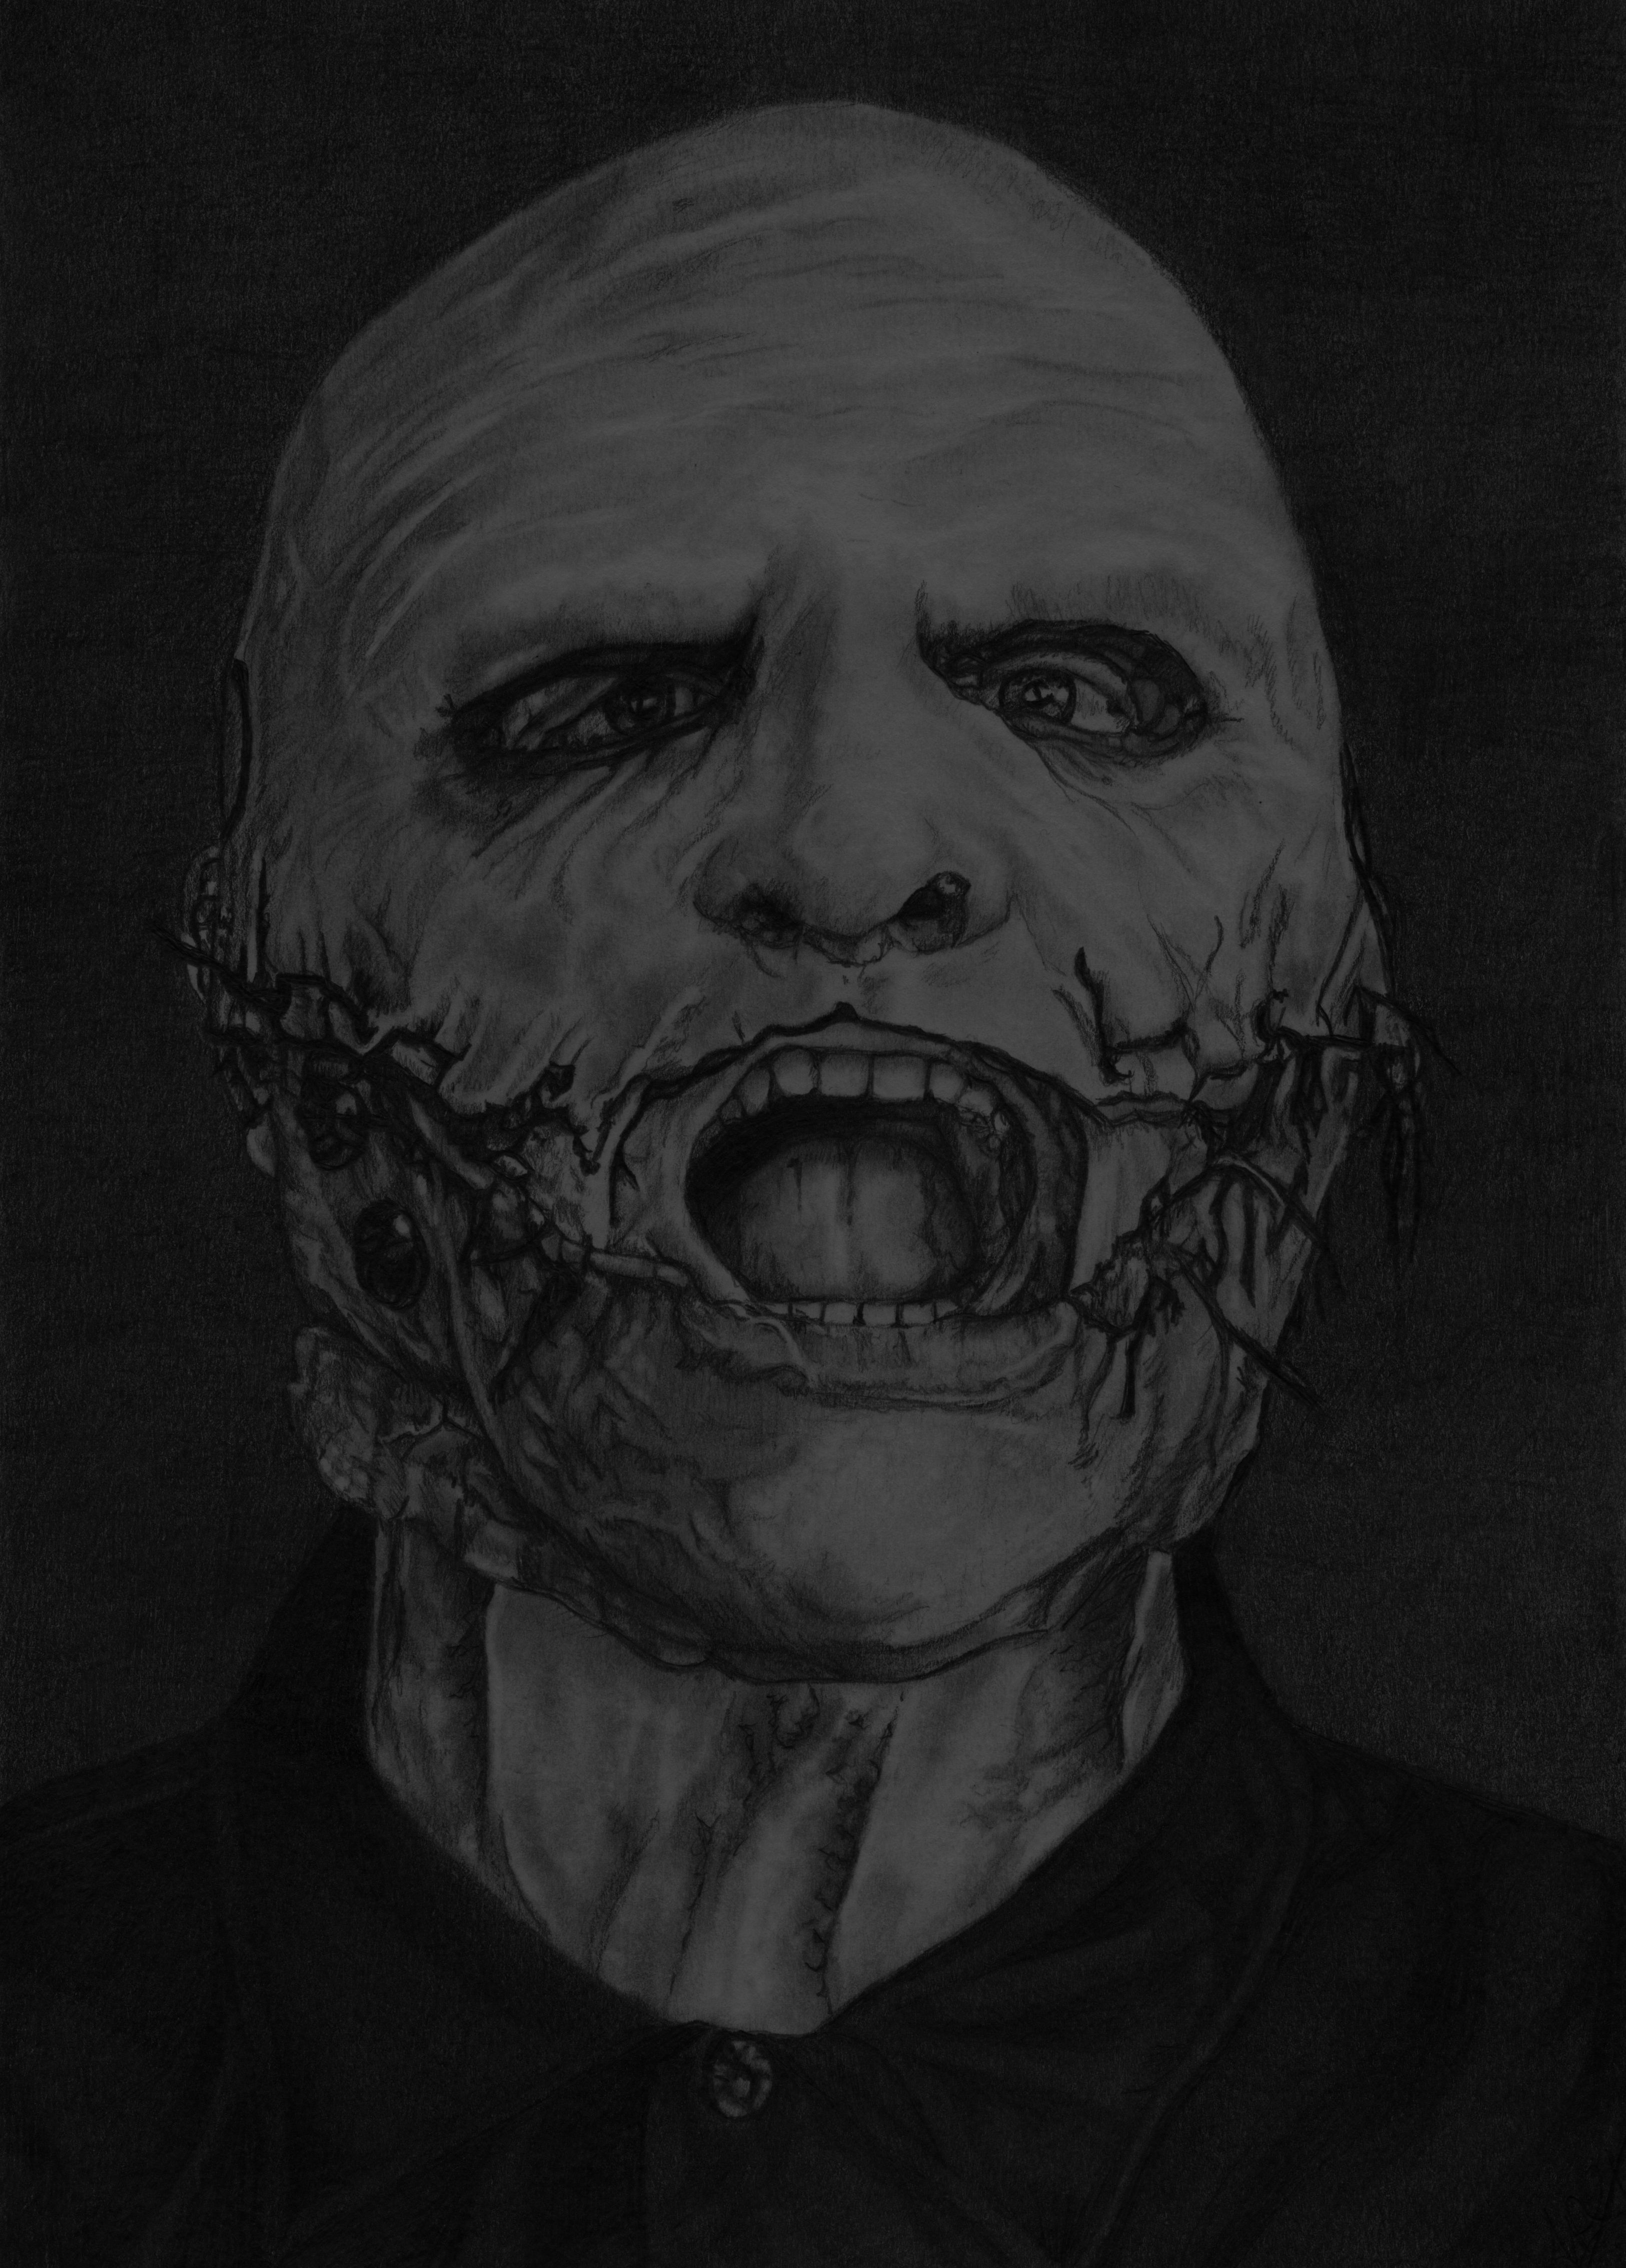 Slipknot, Corey Taylor, mask, pencil drawing. Music